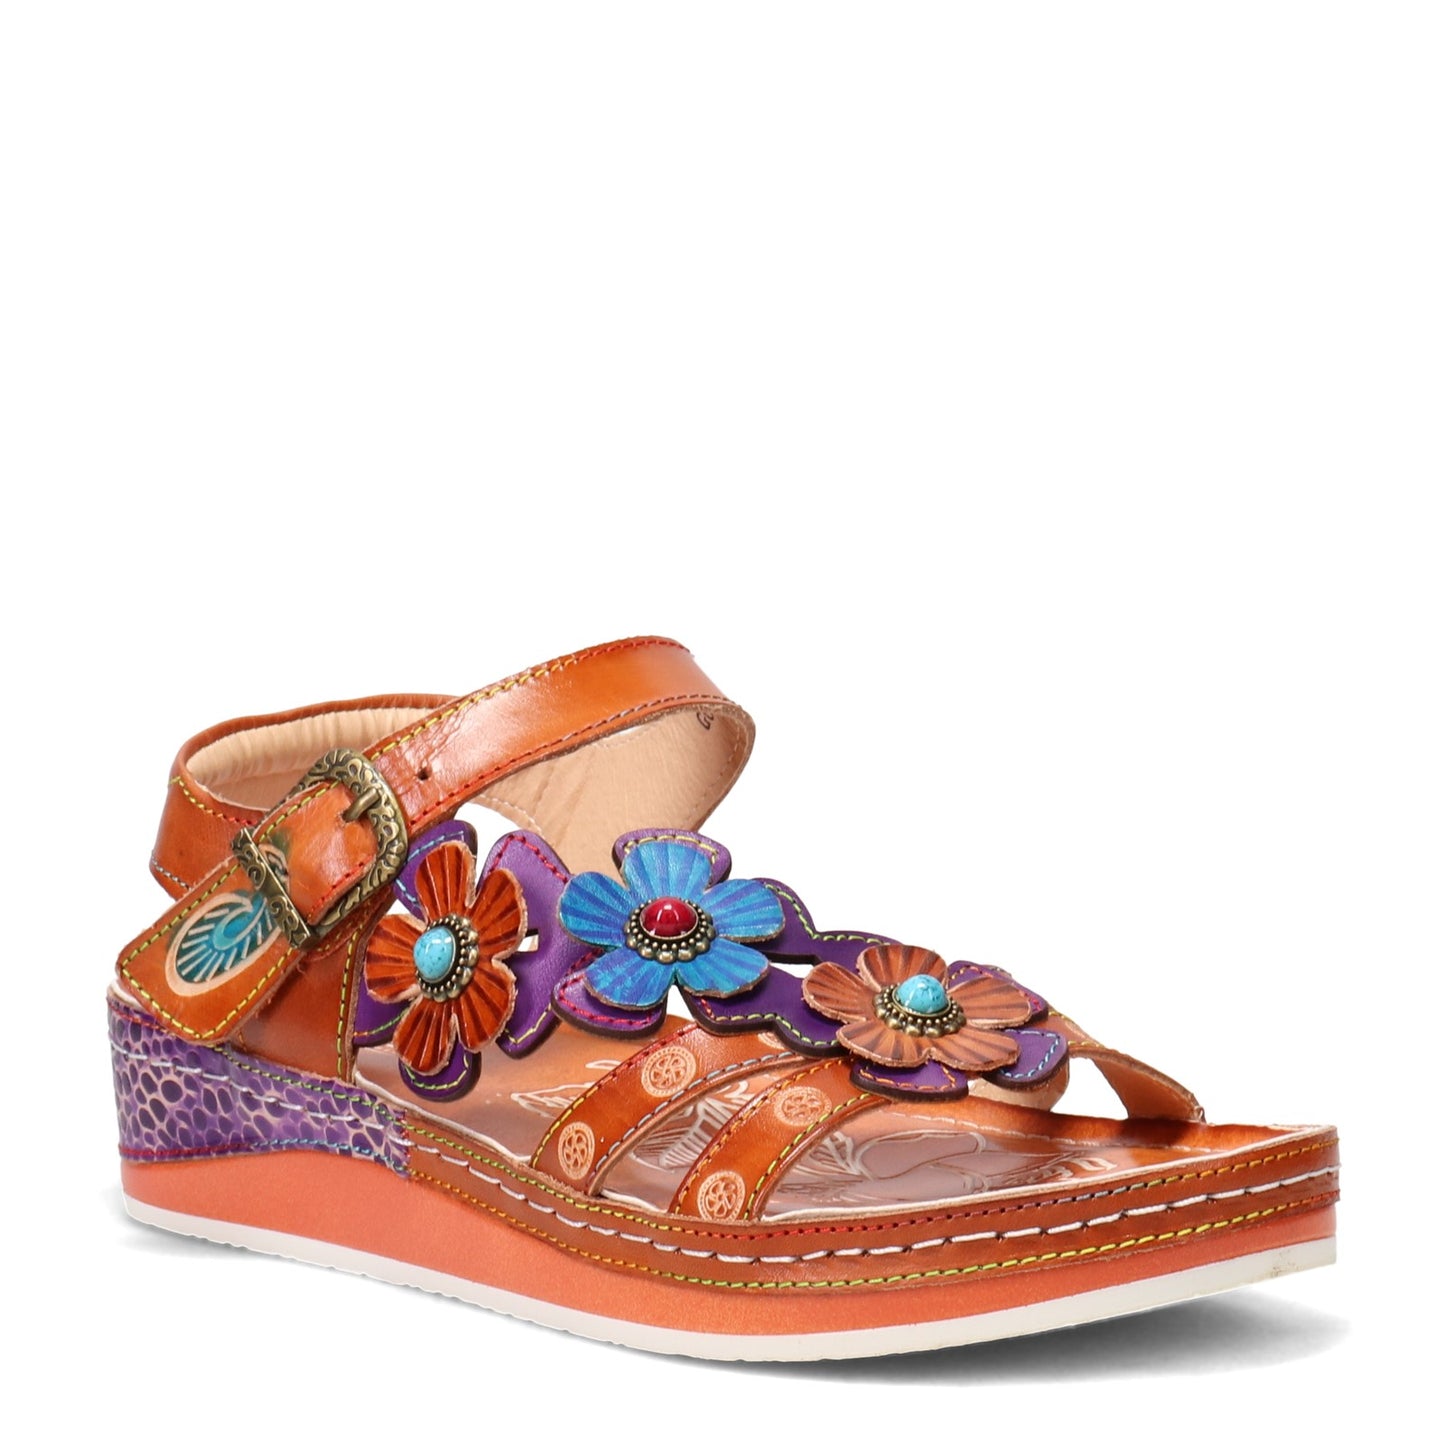 Peltz Shoes  Women's L'Artiste by Spring Step Goodie Sandal Camel Multi GOODIE-CA